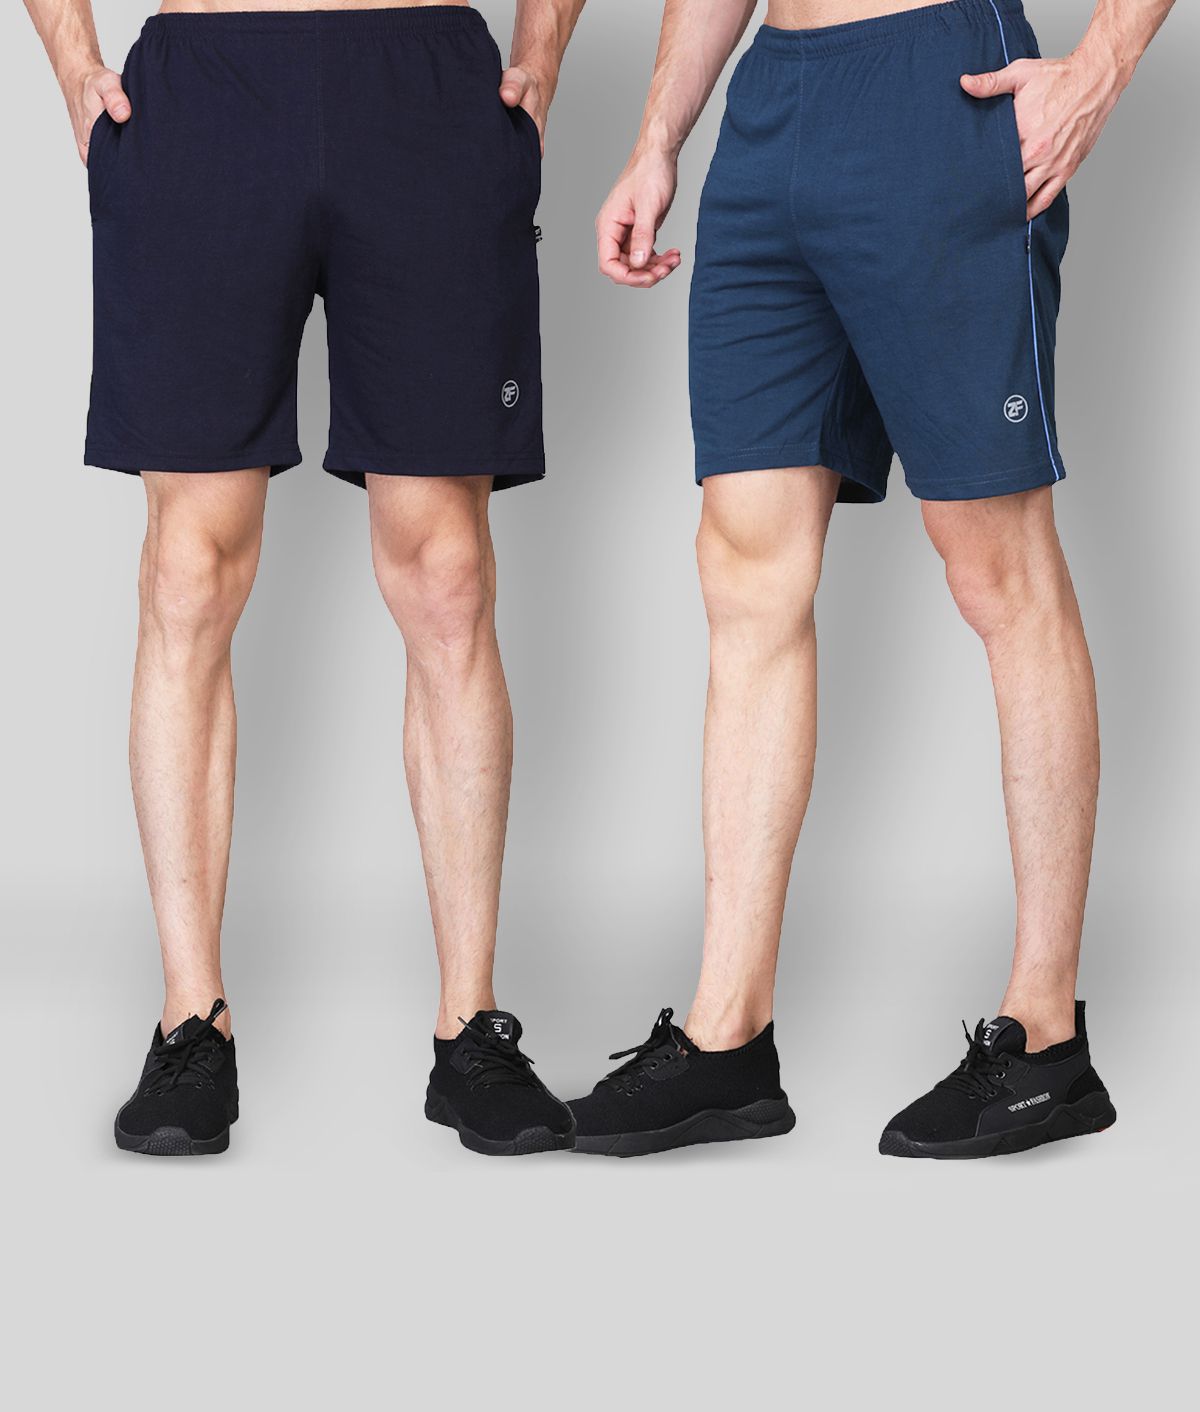     			Zimfit Navy & Black Cotton Blend Running Shorts Pack of 2